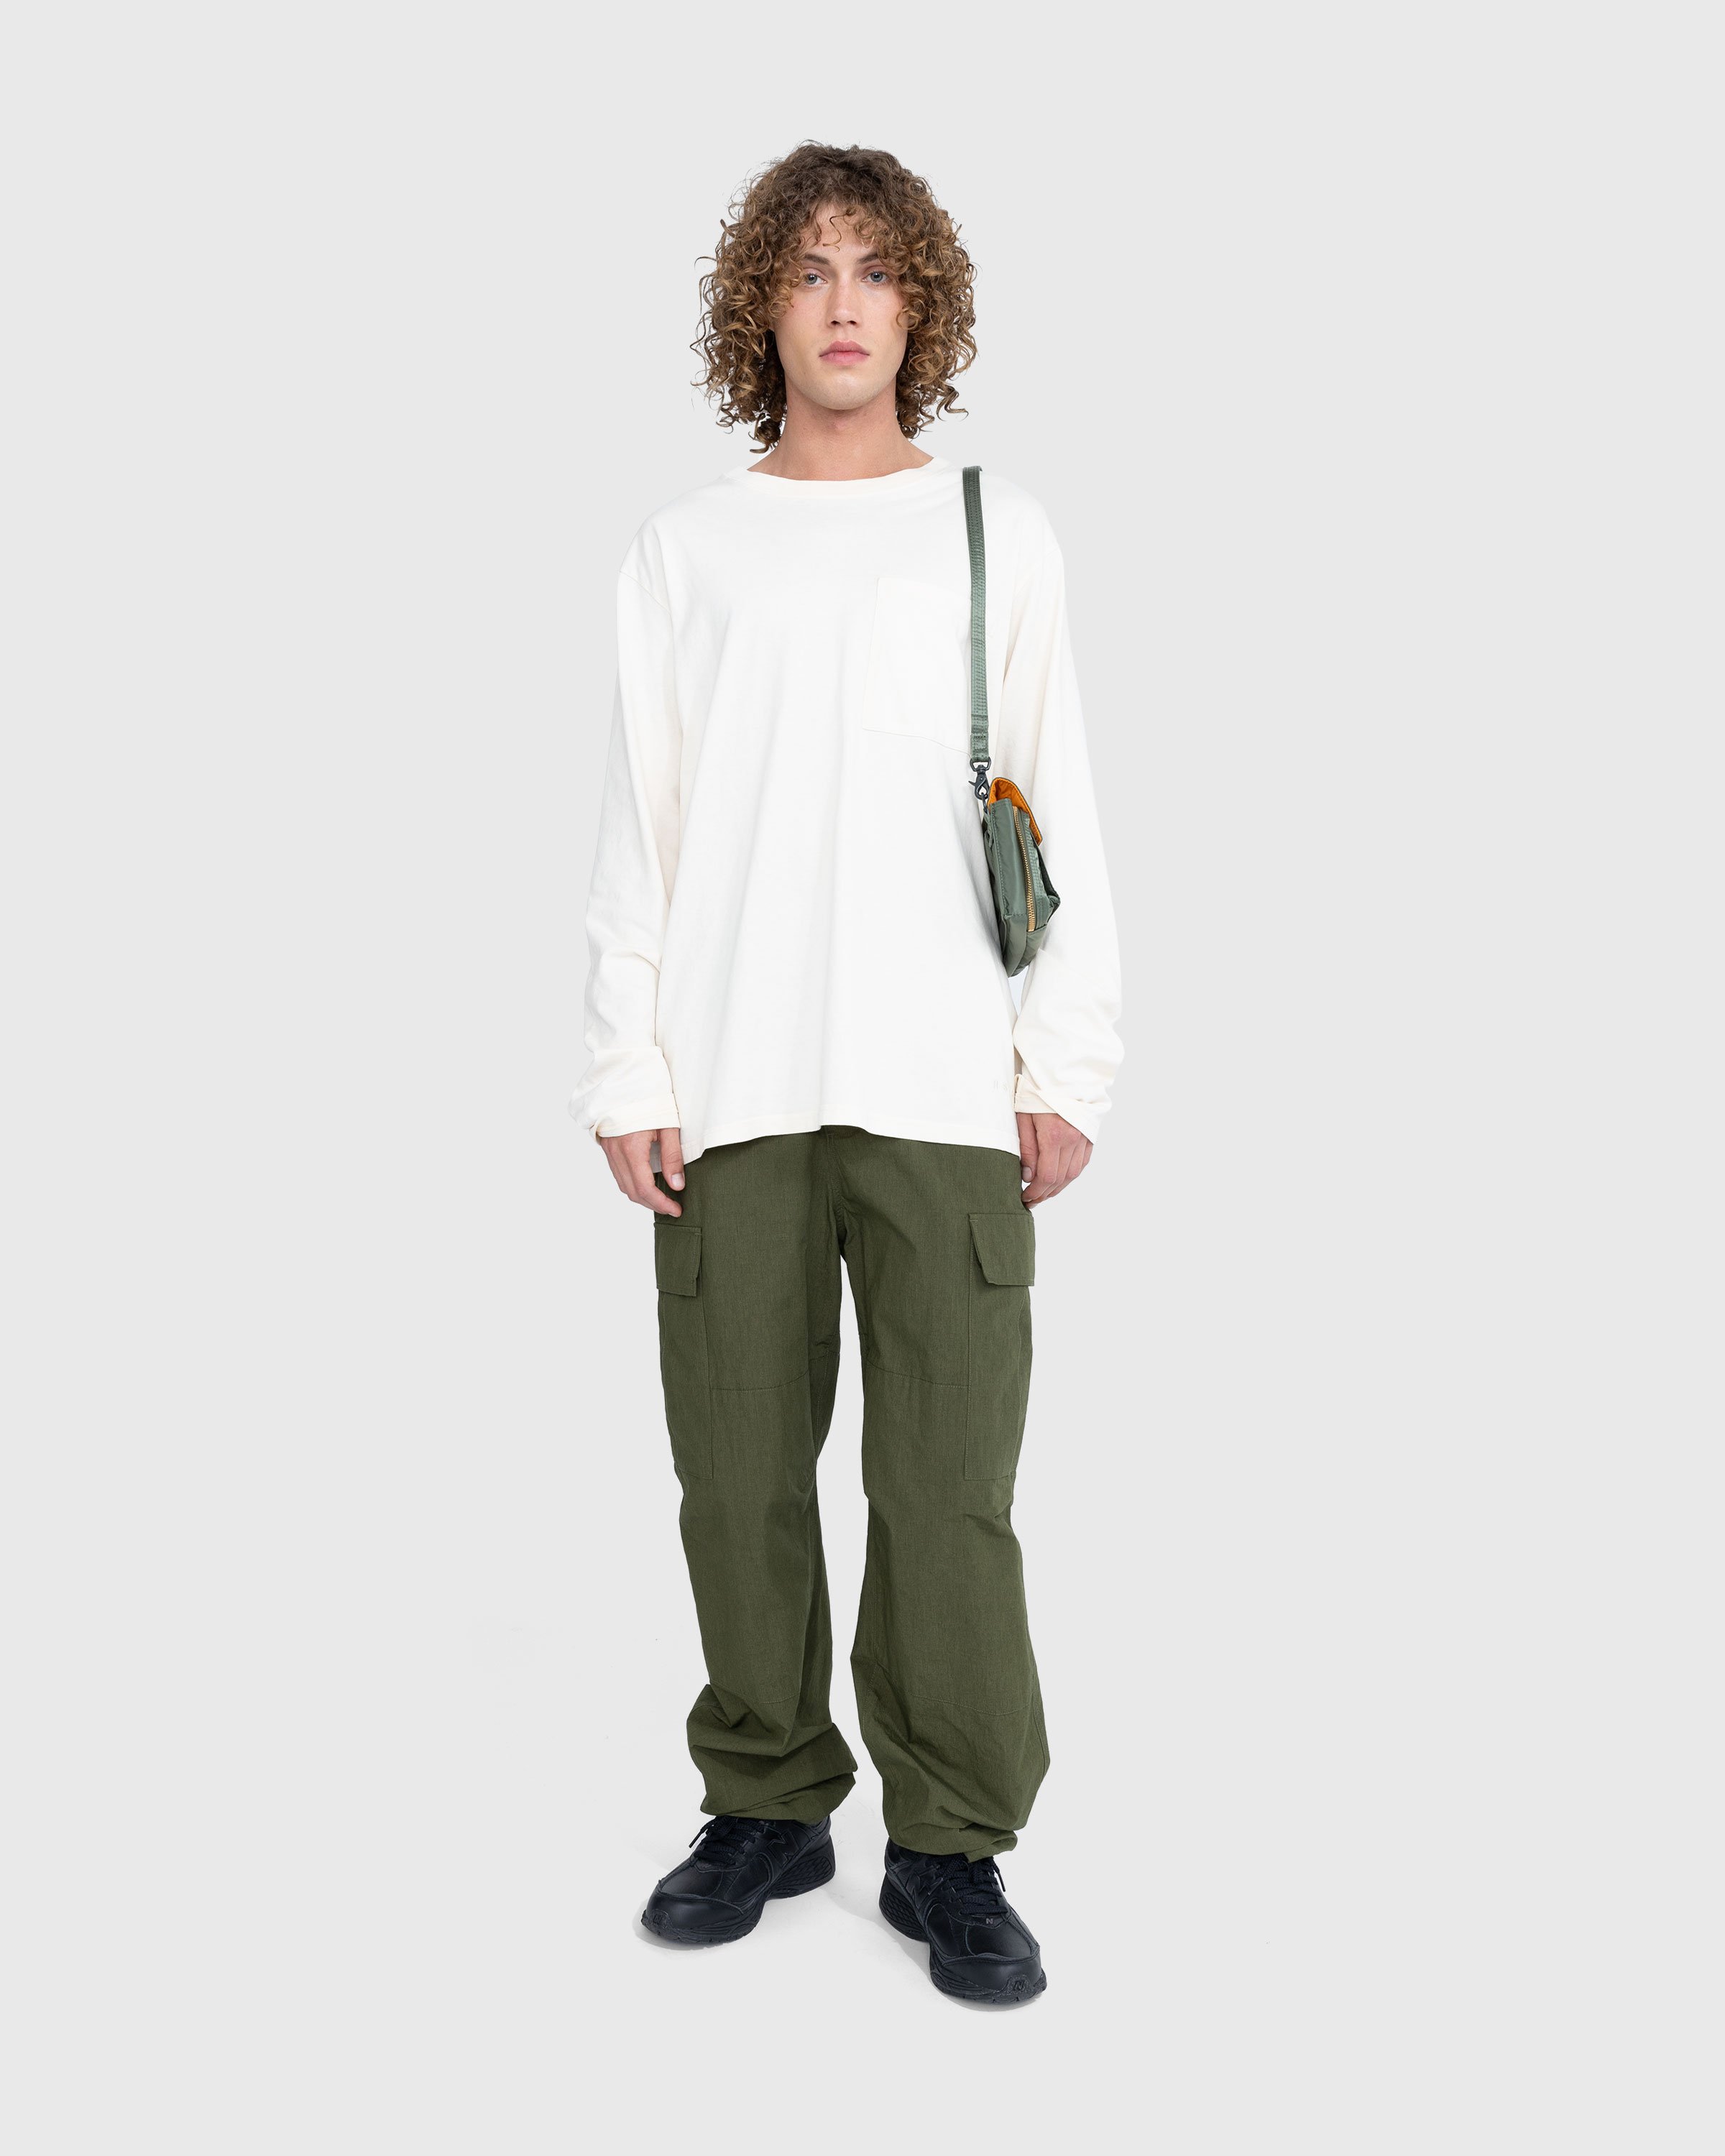 Porter-Yoshida & Co. - TANKER SHOULDER BAG - Accessories - Green - Image 4